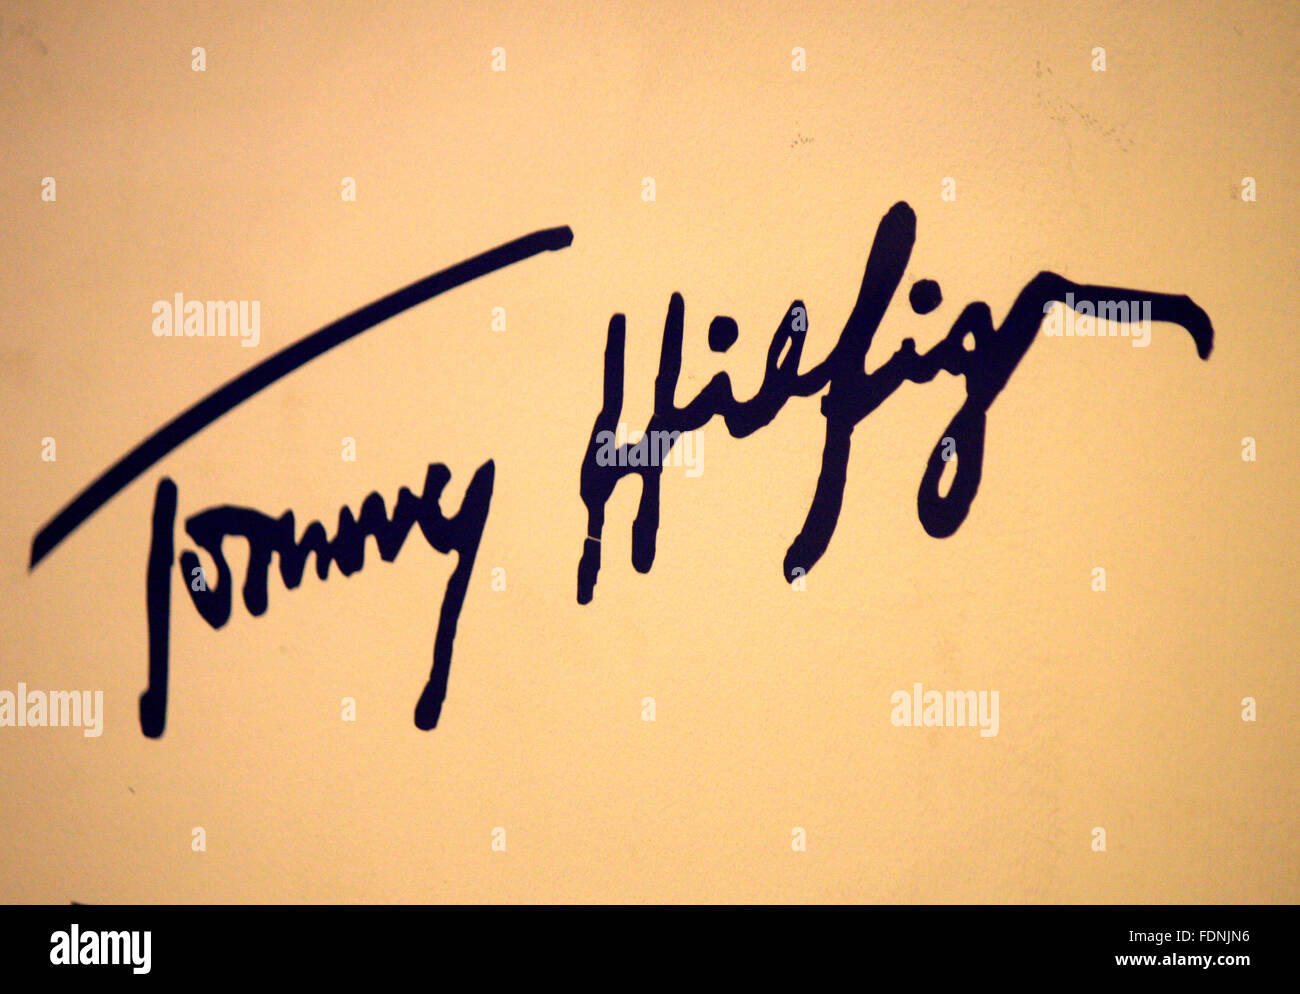 Markenname: "Tommy Hilfiger", Berlin Stock Photo - Alamy